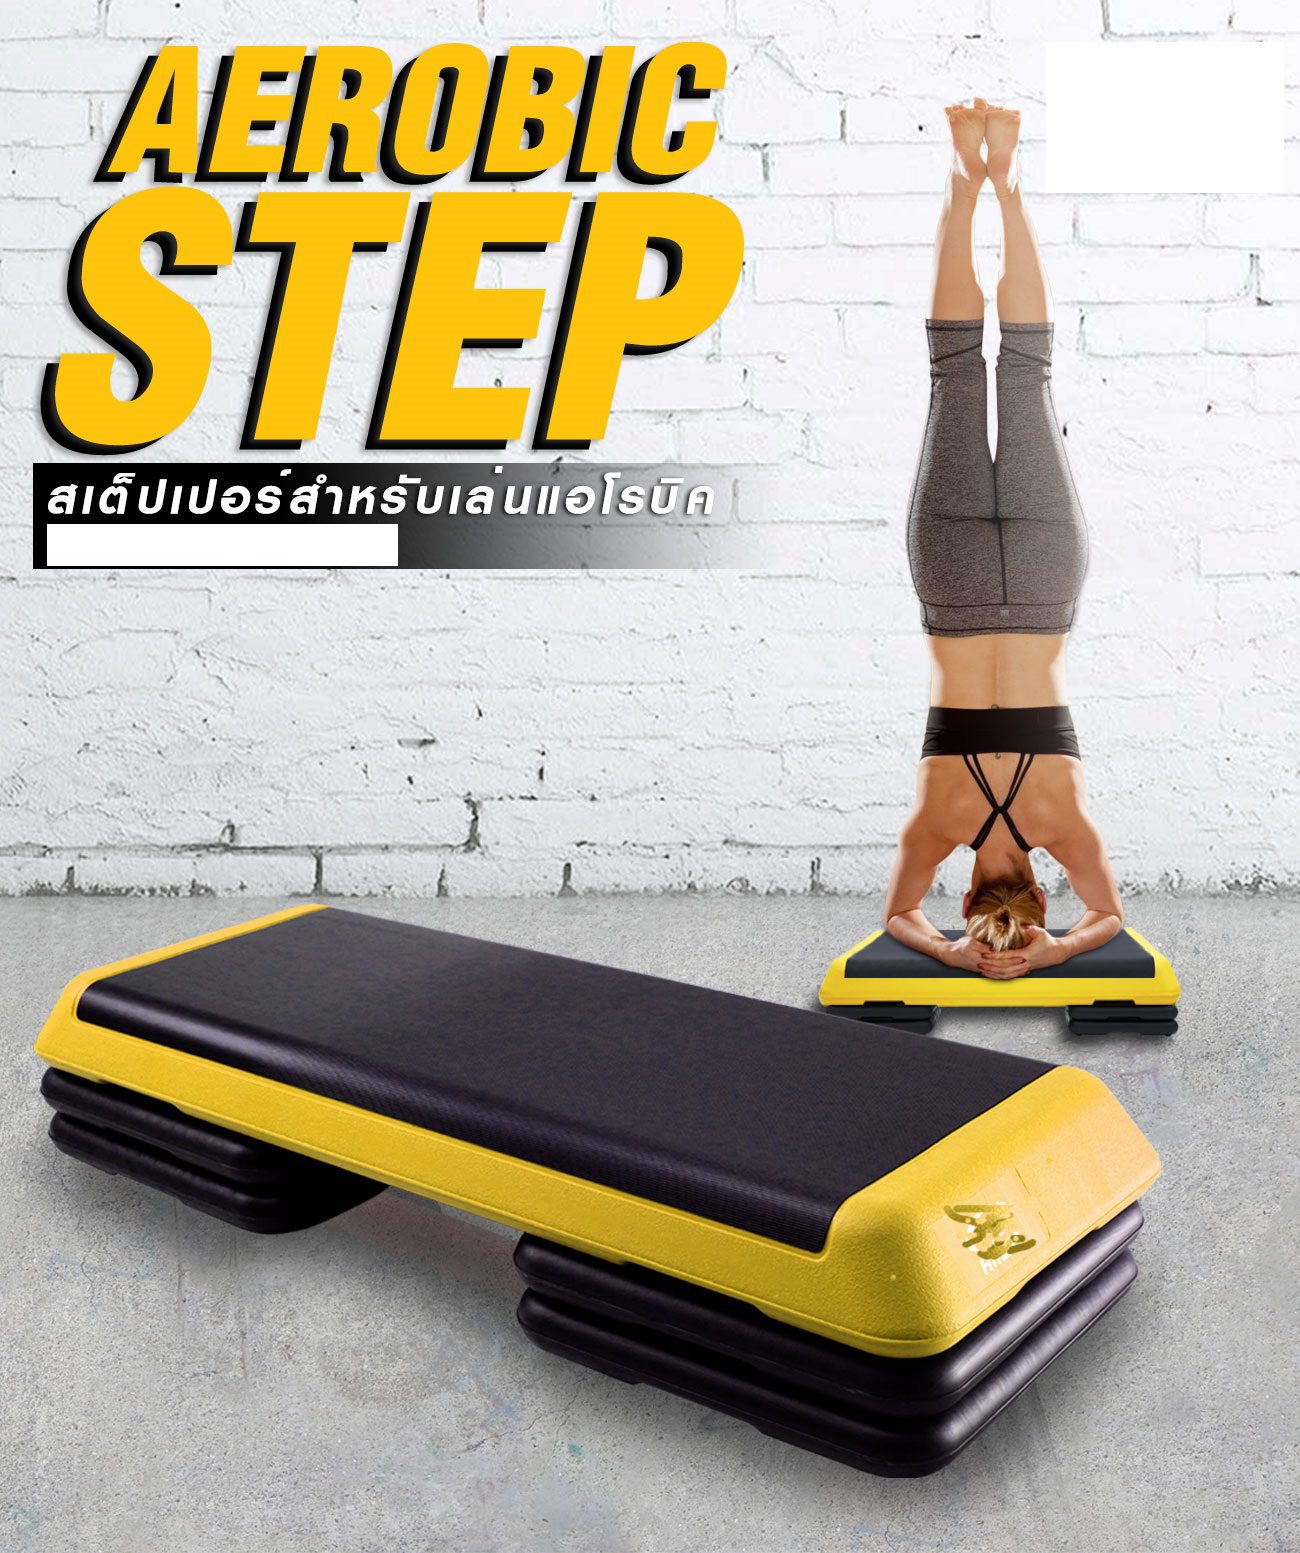 Aerobic Step block - Black, yellow